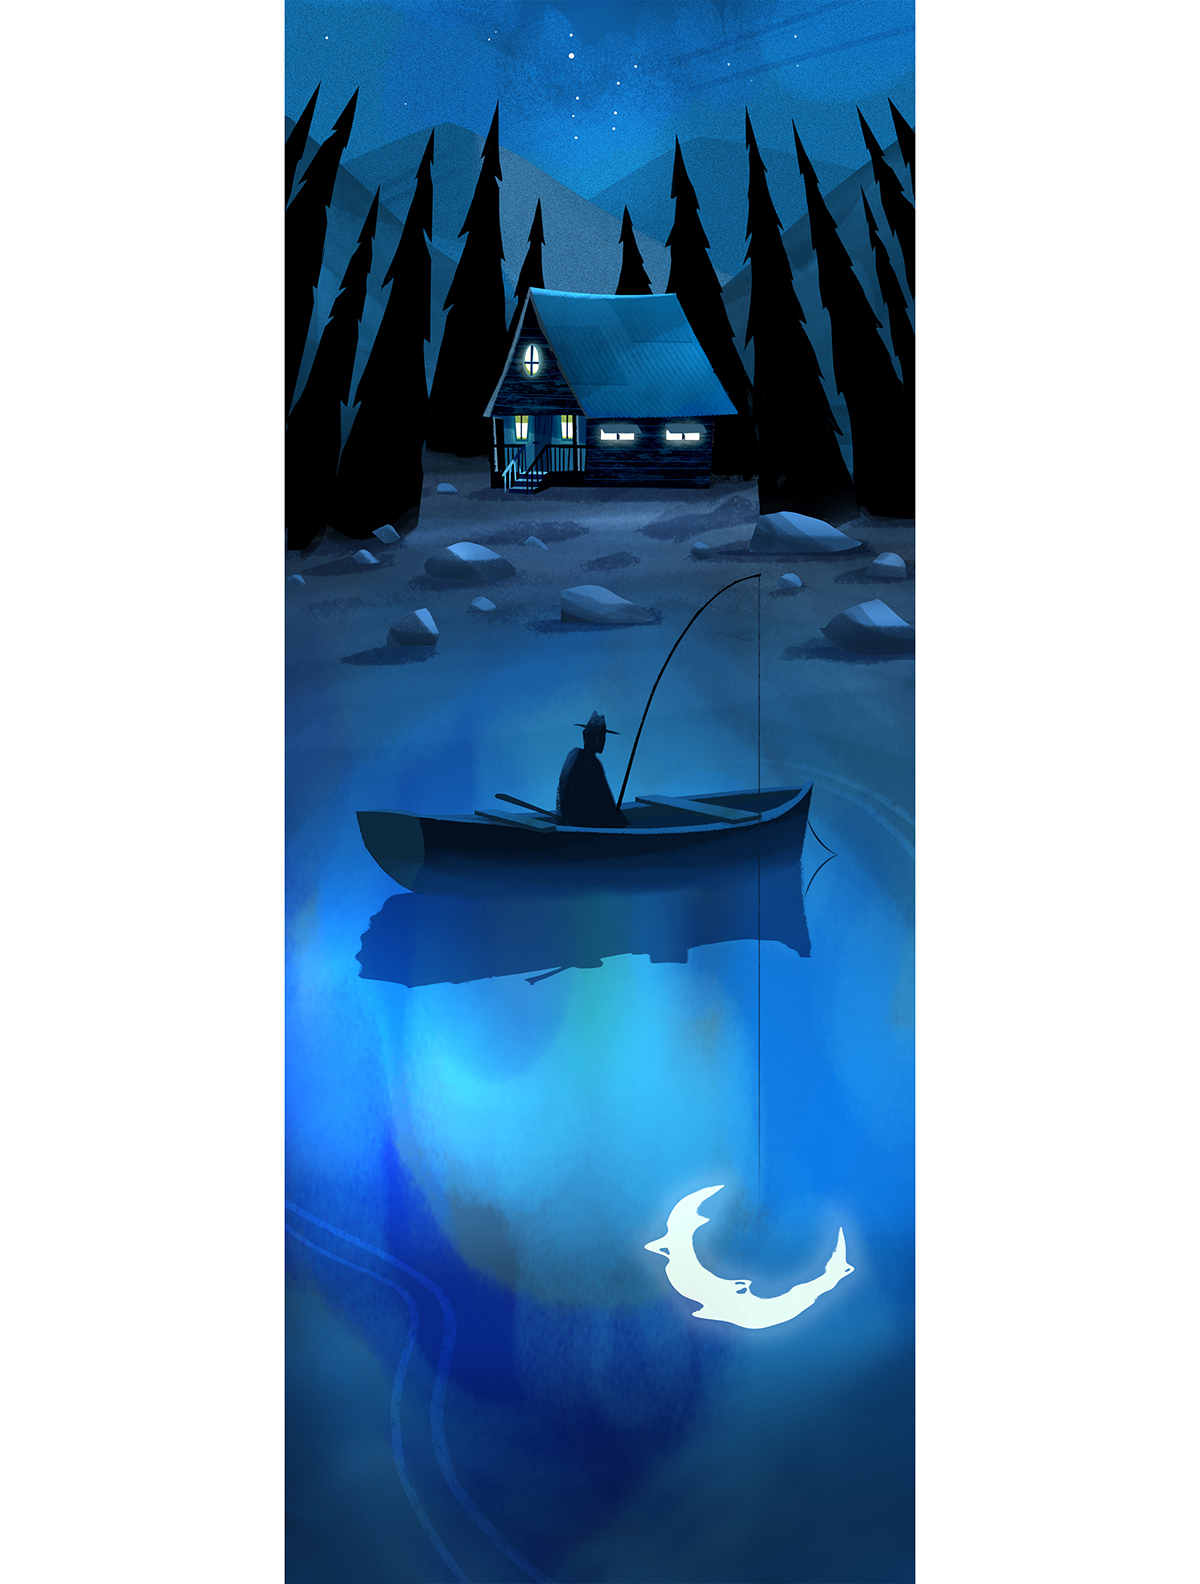 moon moonlight Fisherman cabin woods night